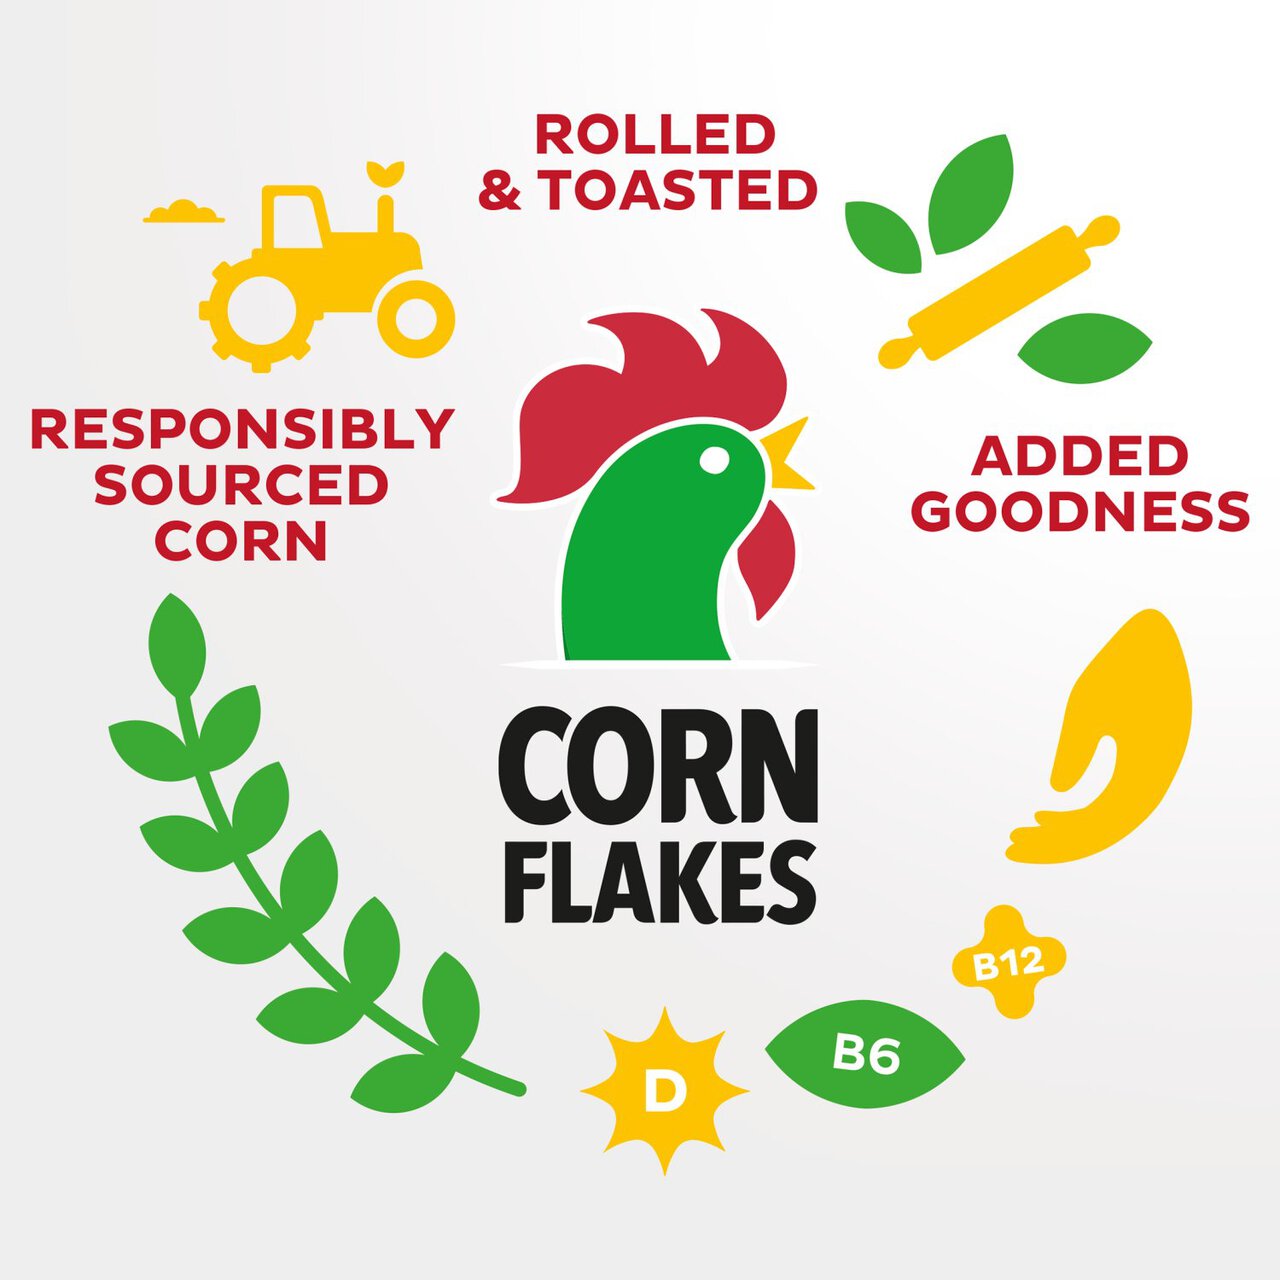 Kellogg's Corn Flakes Breakfast Cereal 500g 500g